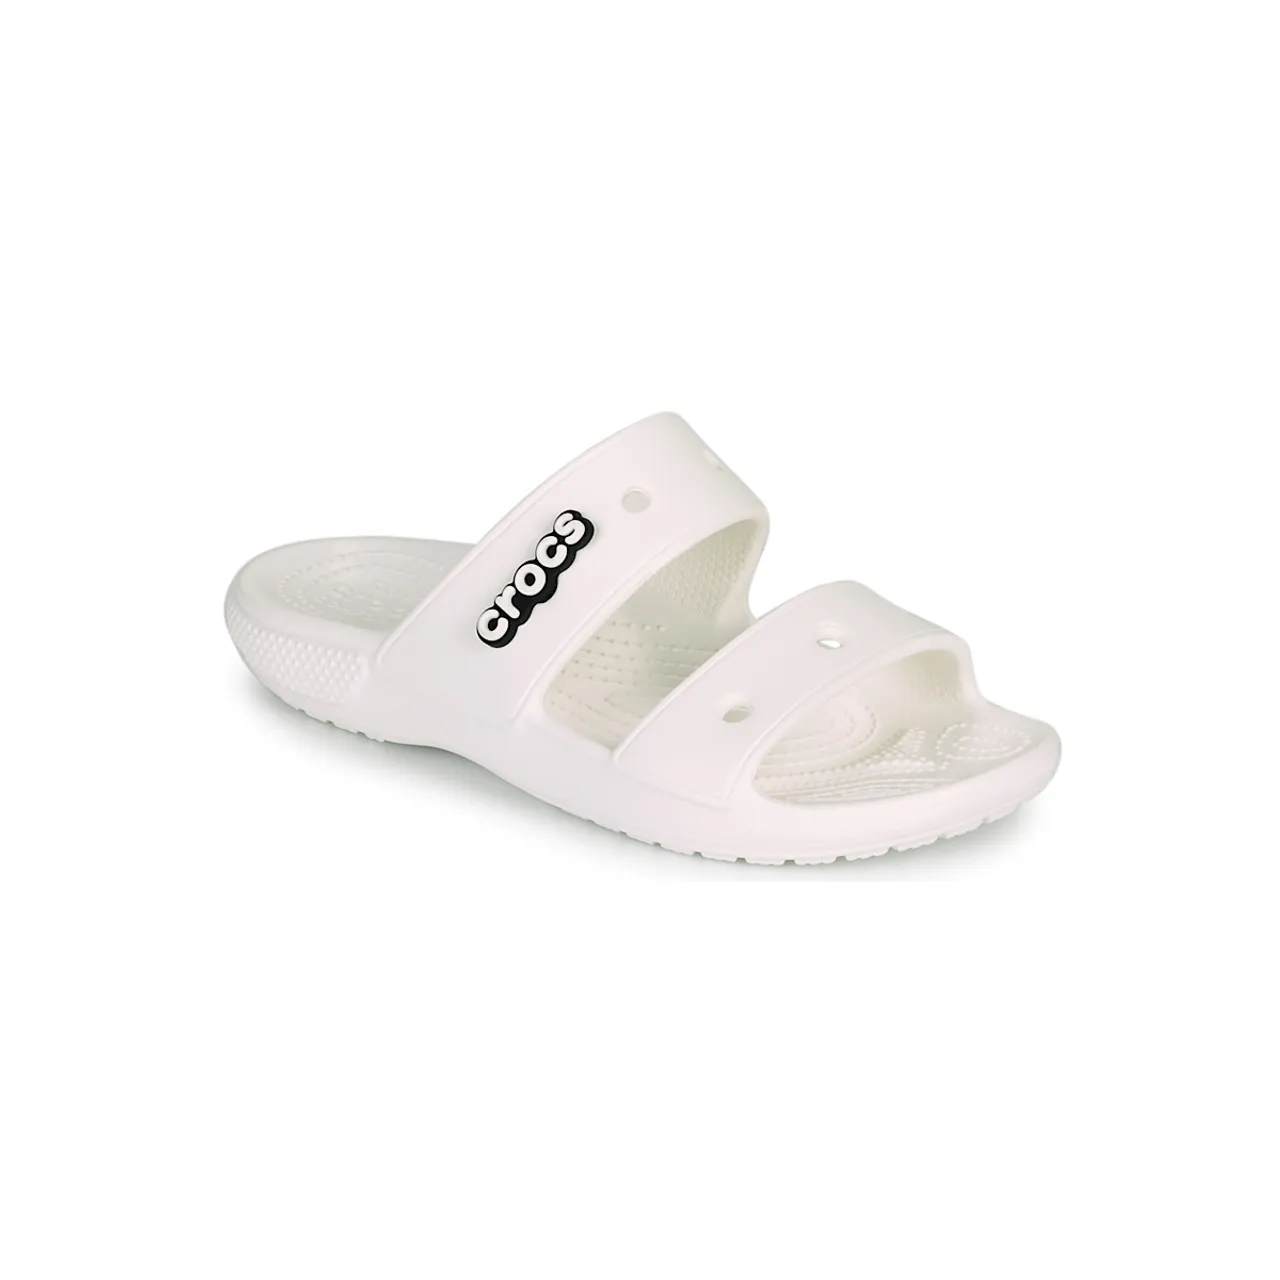 Crocs  CLASSIC CROCS SANDAL  women's Mules / Casual Shoes in White